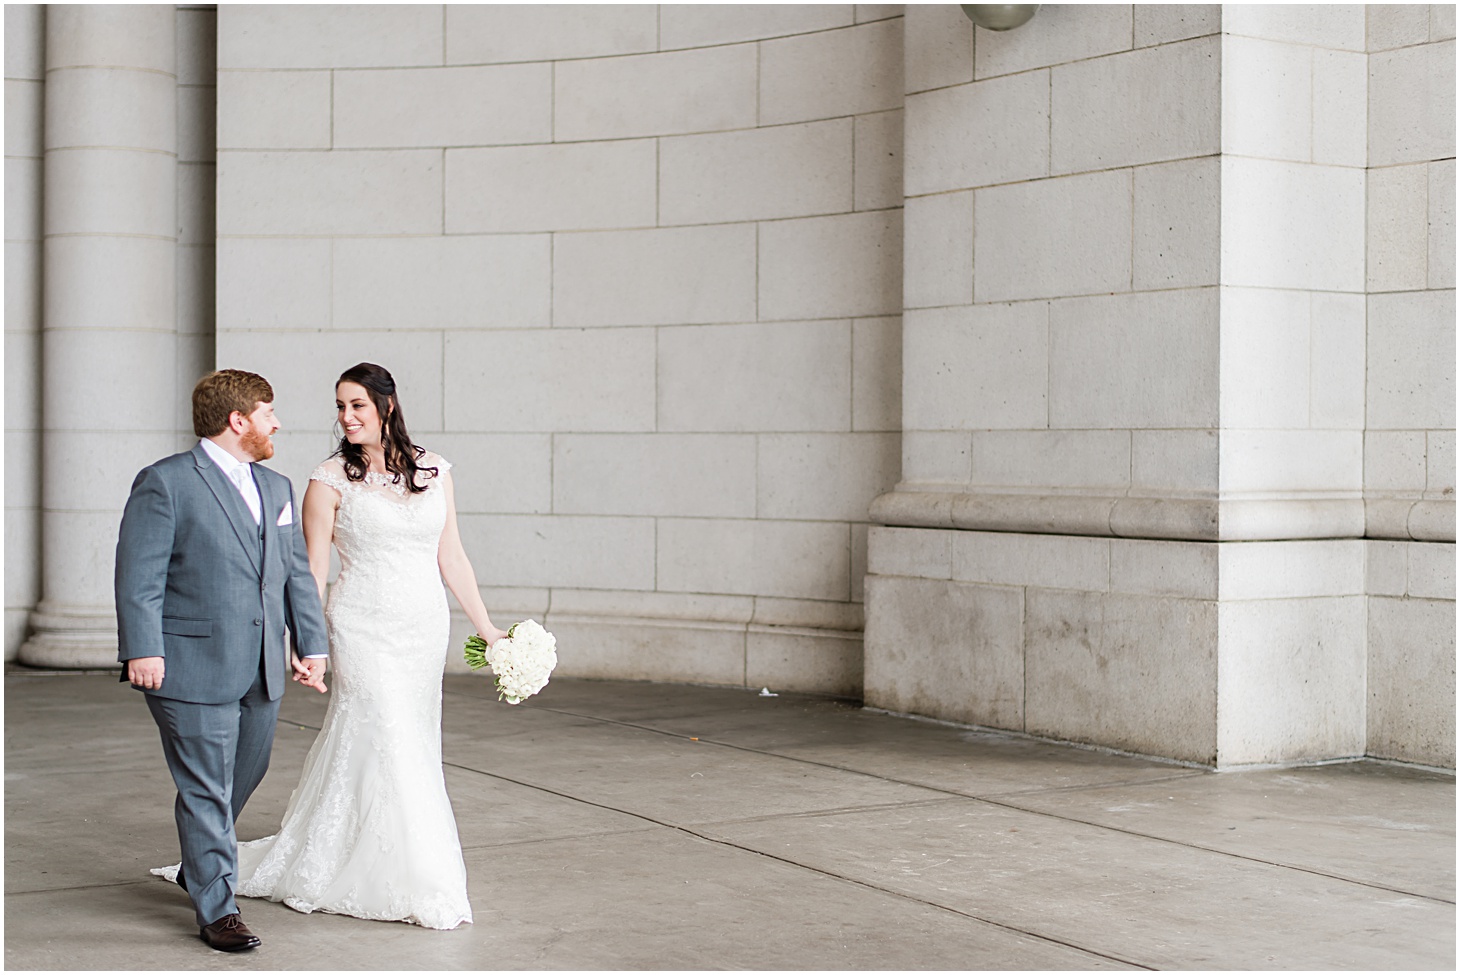 Union Station Wedding | Top Washington DC wedding photographer Sarah Bradshaw